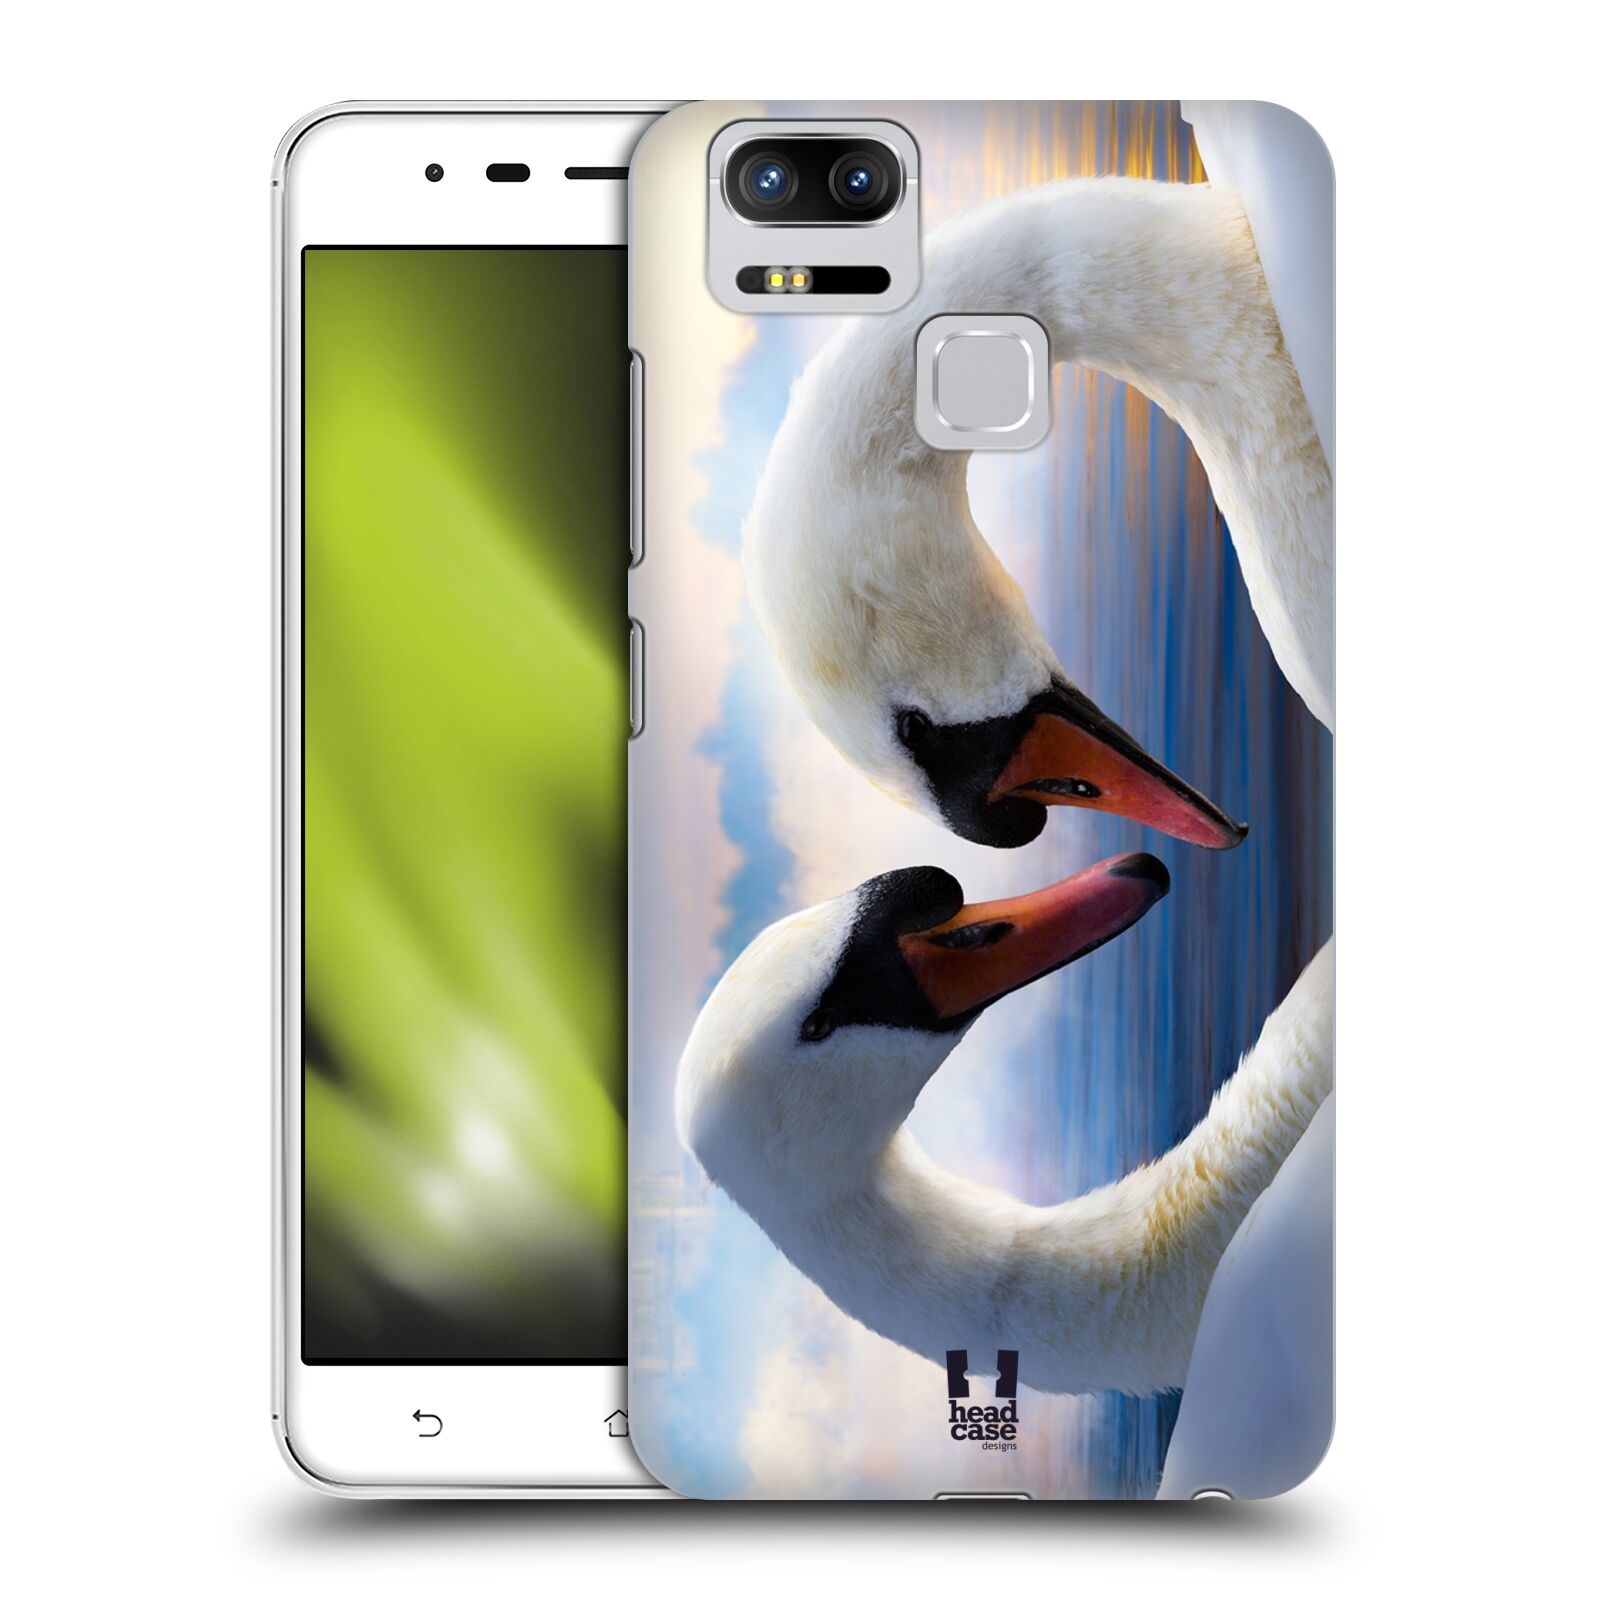 HEAD CASE plastový obal na mobil Asus Zenfone 3 Zoom ZE553KL vzor Divočina, Divoký život a zvířata foto ZAMILOVANÉ LABUTĚ, LÁSKA